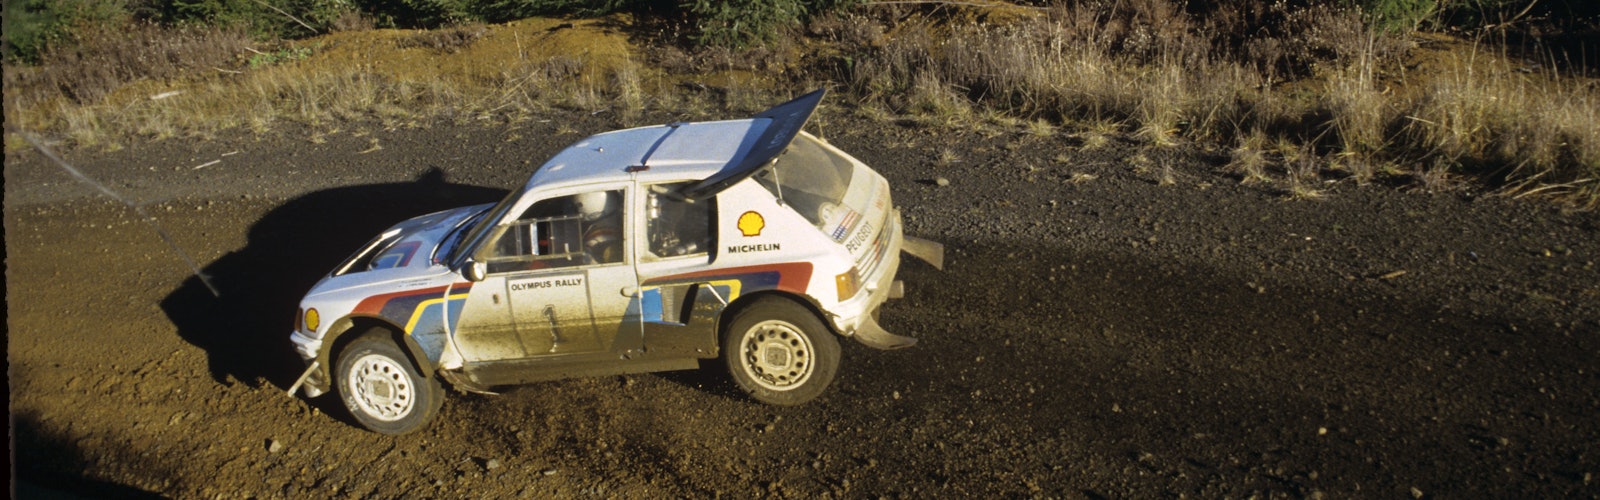 1986 Olympus Rallye USA copyright:Mcklein